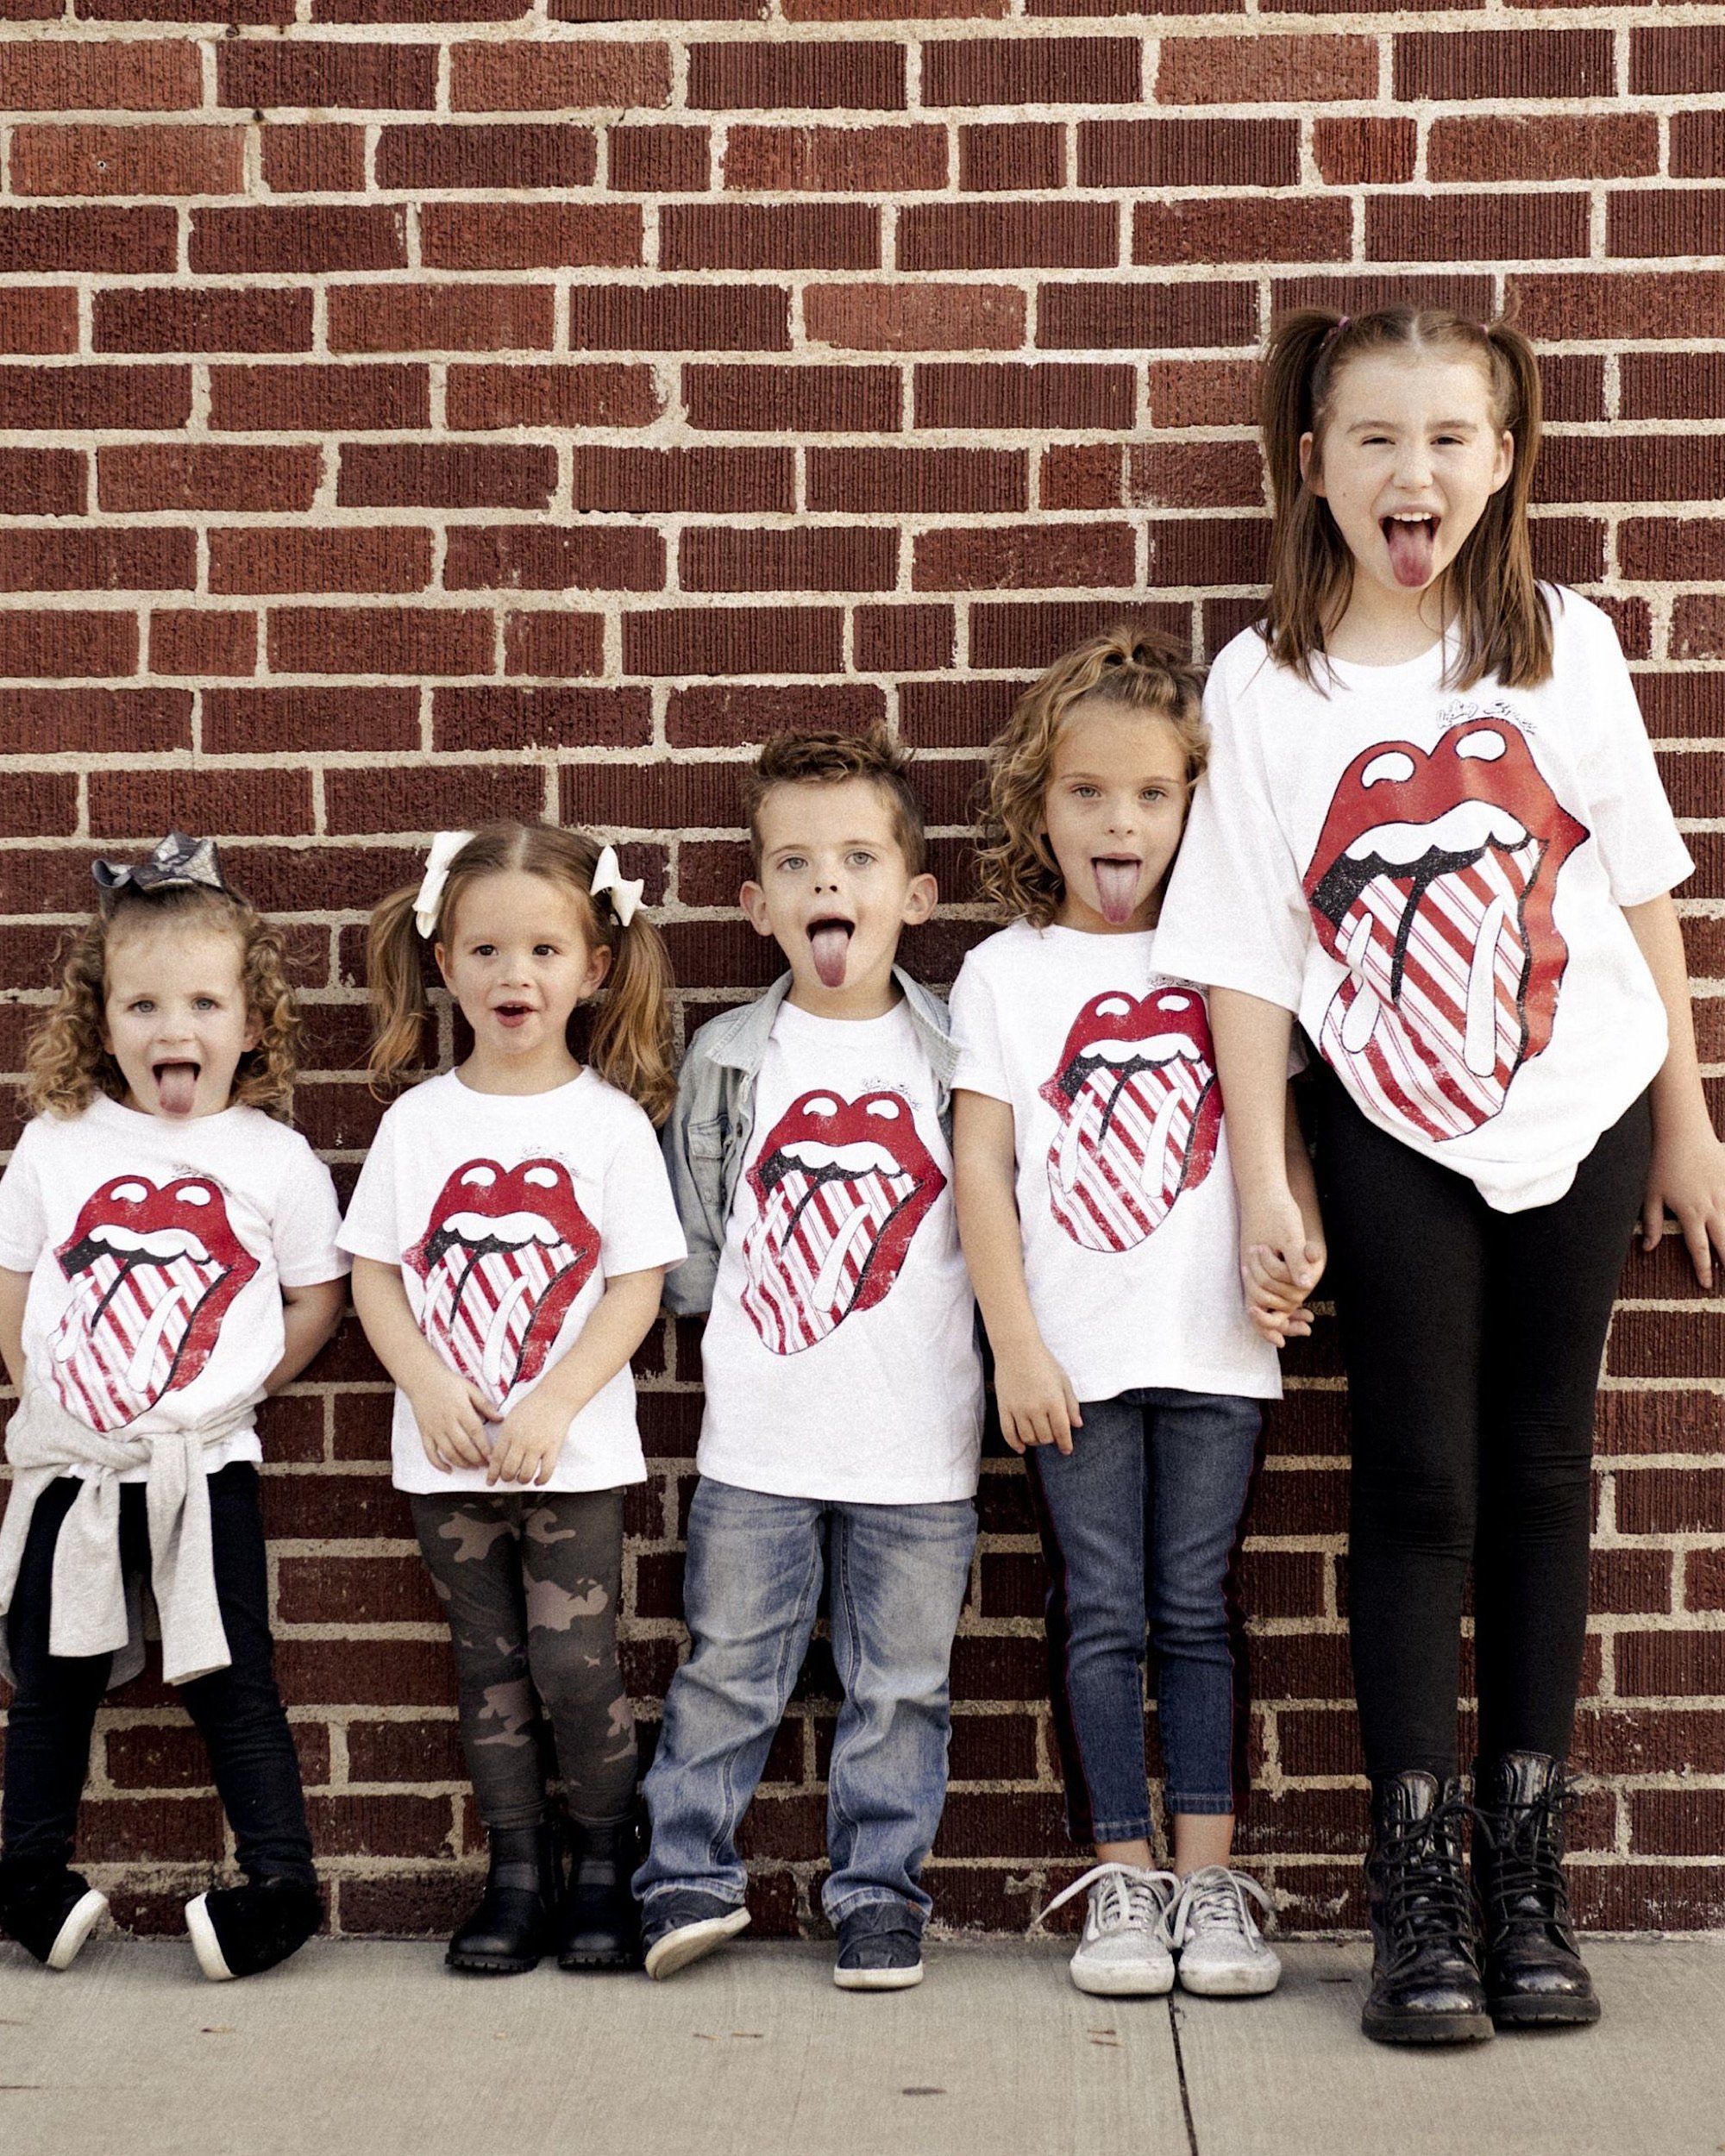 Children's Rolling Stones Candy Cane Lick White Tee - shoplivylu